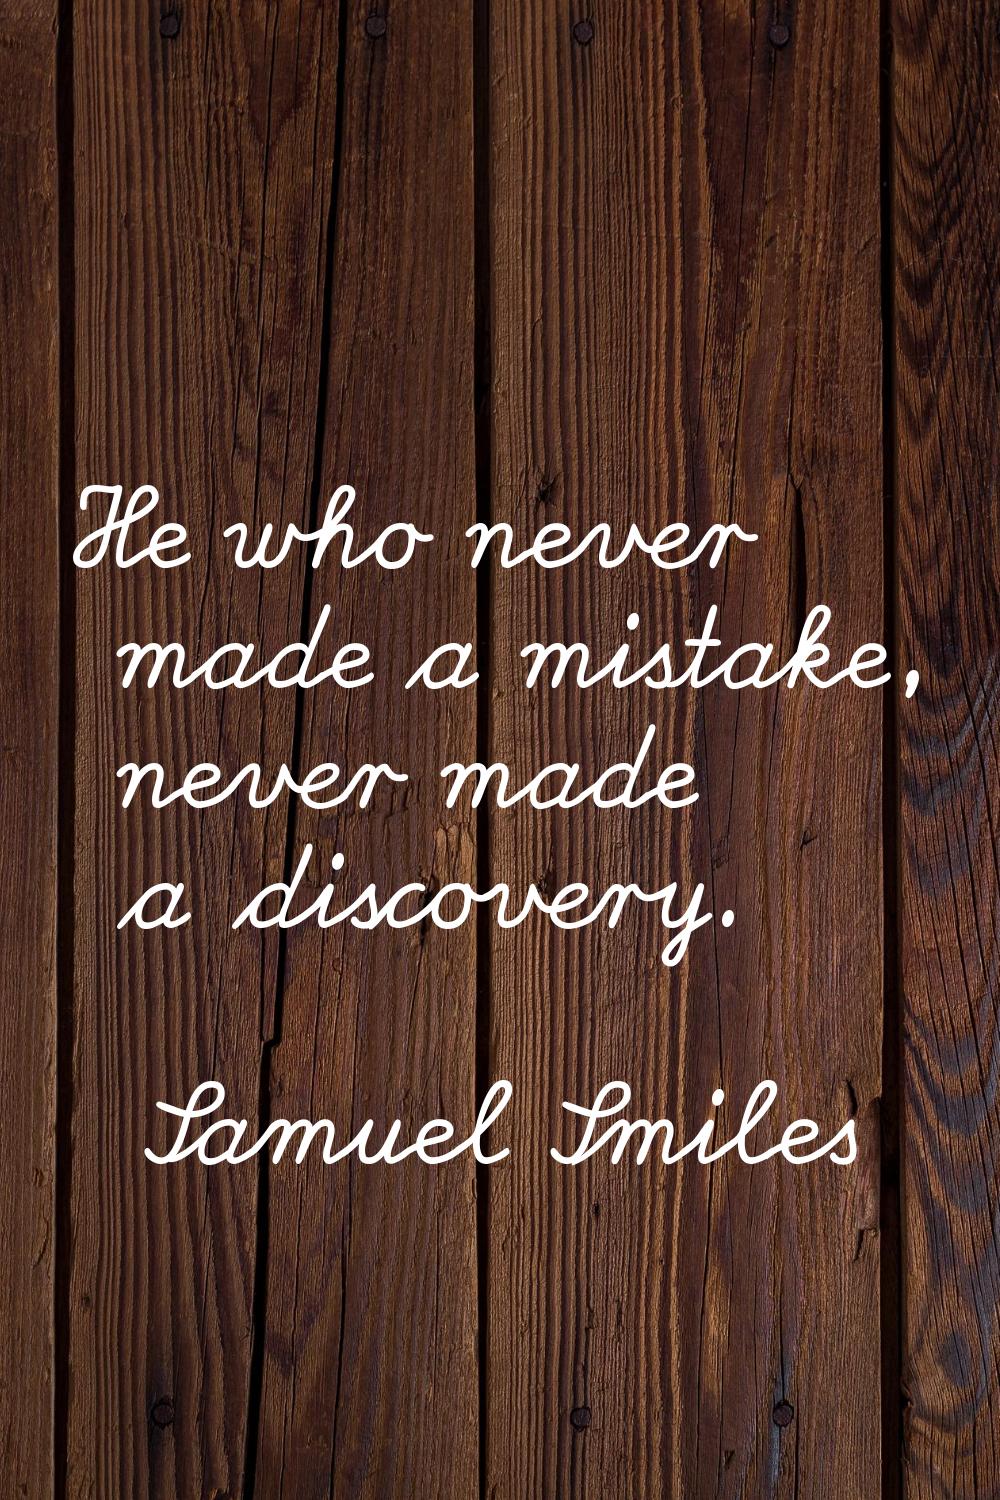 He who never made a mistake, never made a discovery.